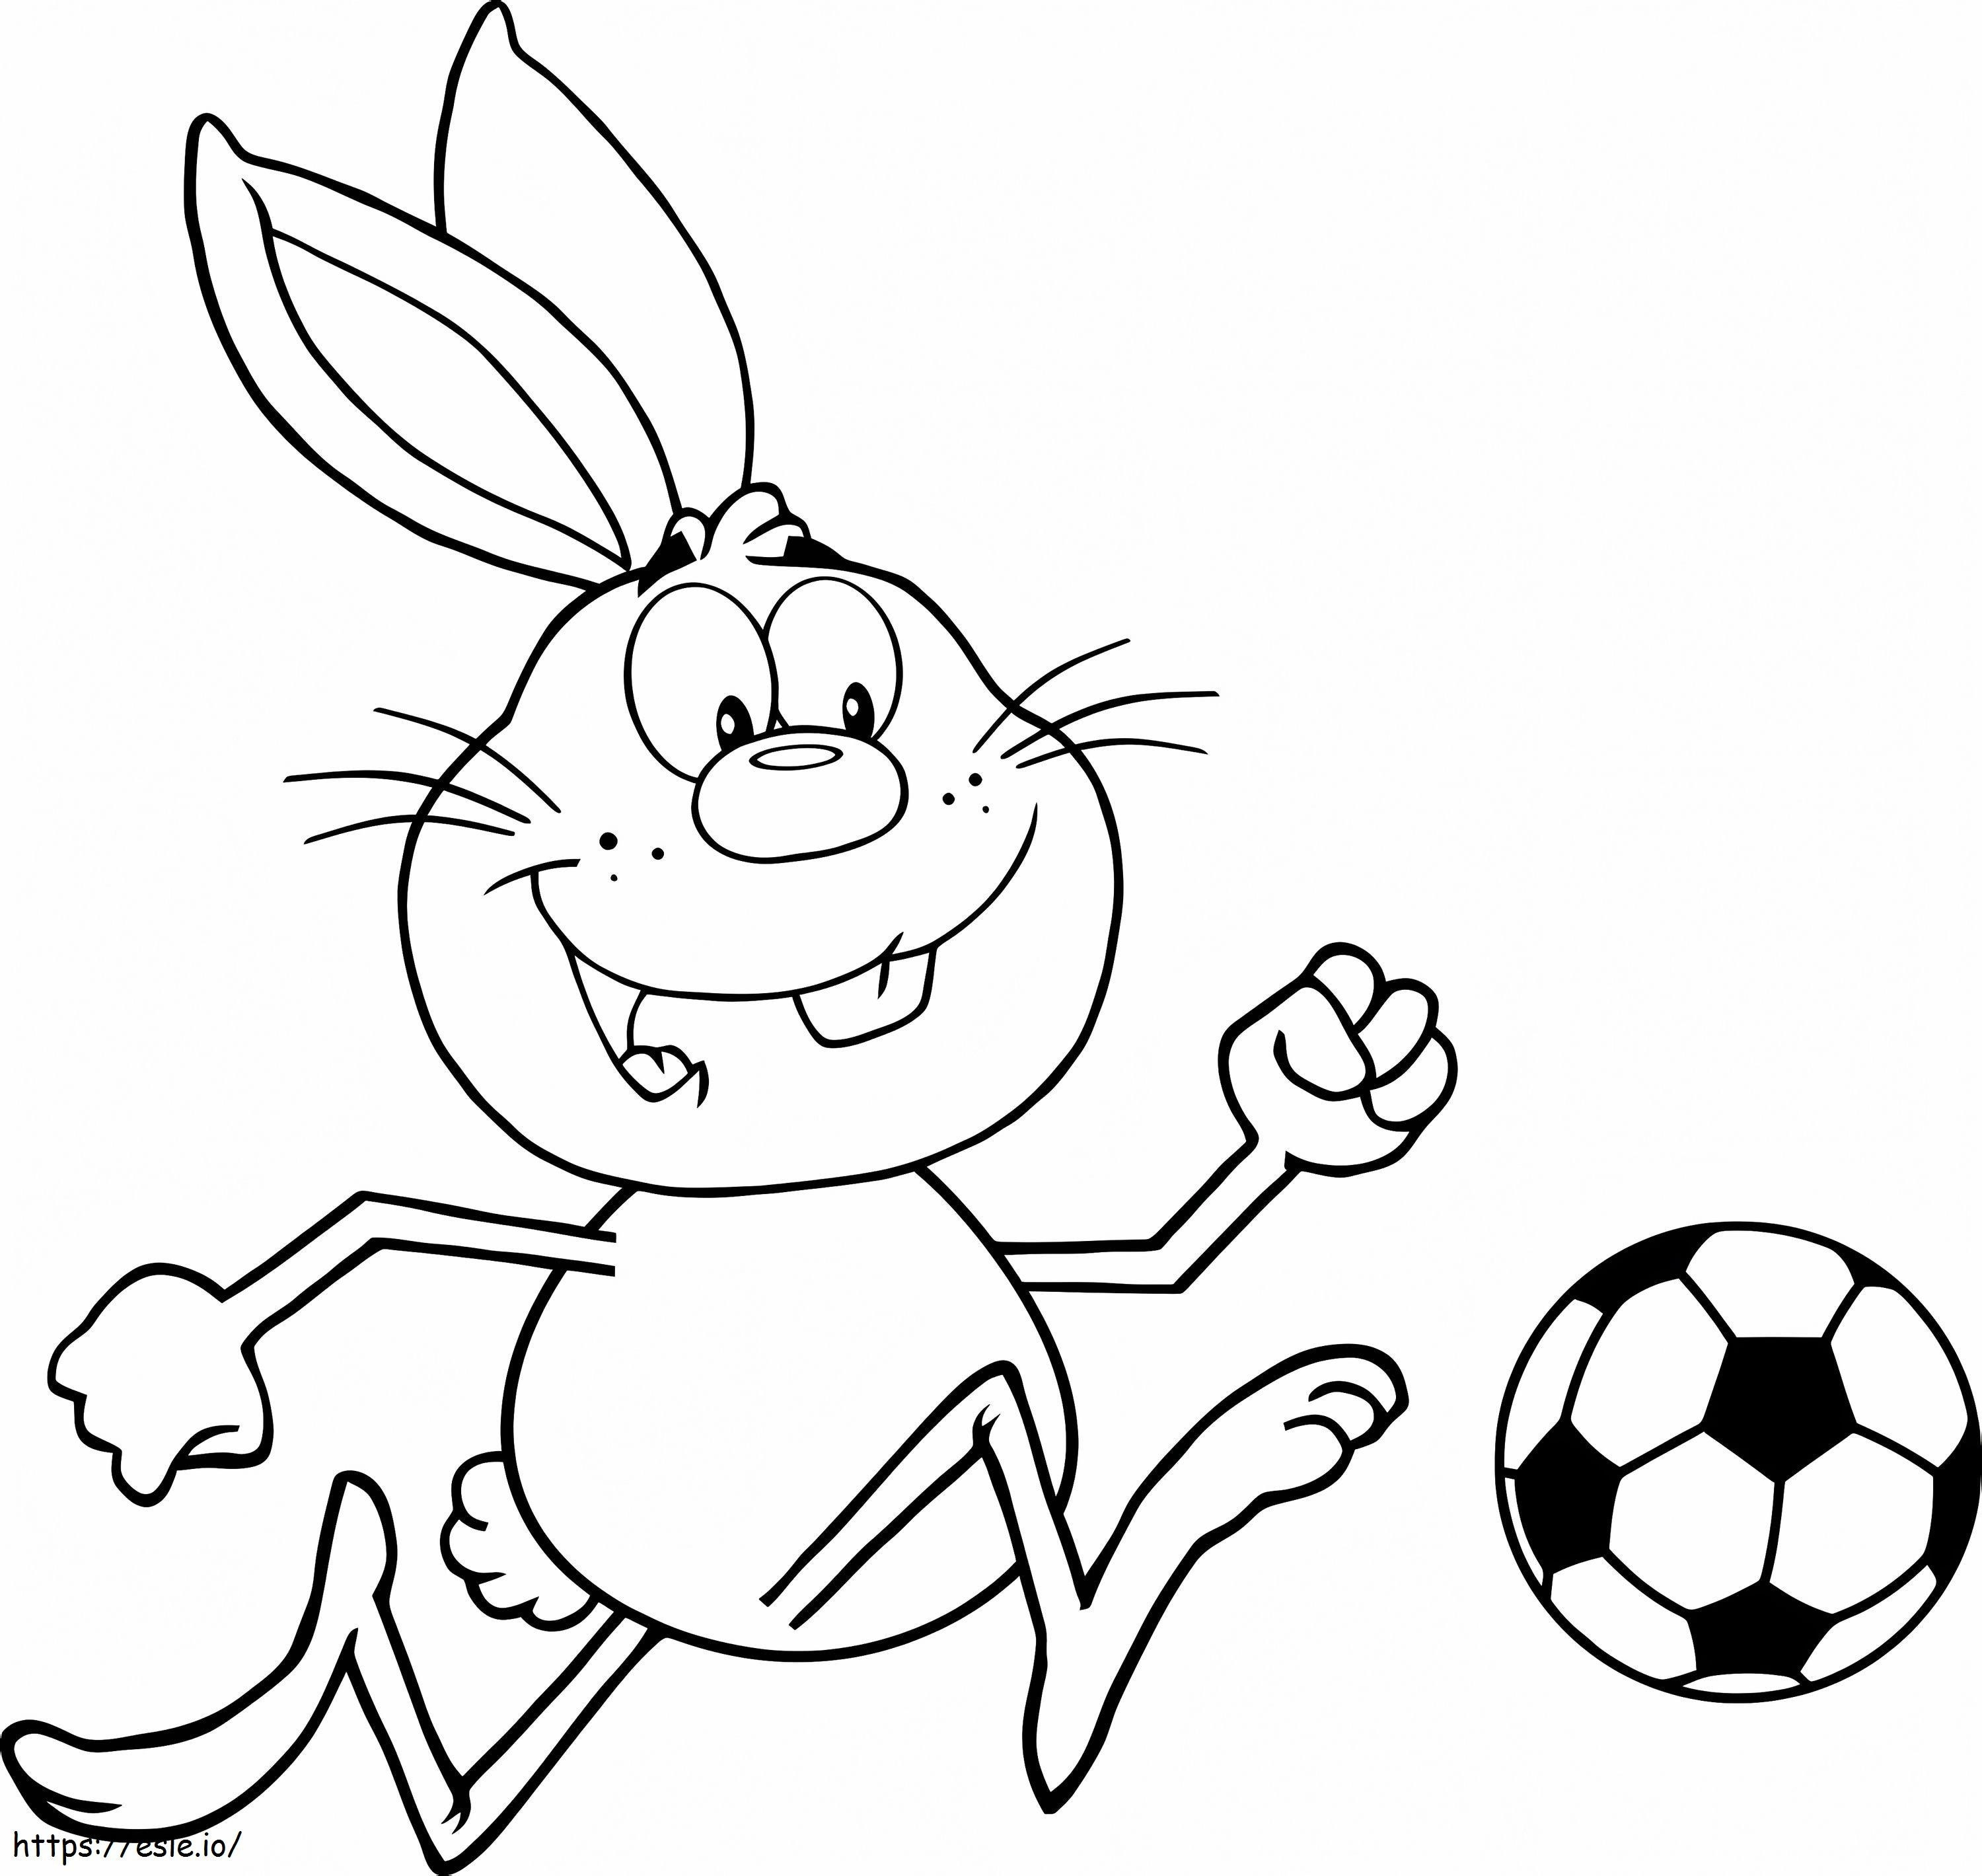 1542595560_Cute Rabbit Playing Soccer 1024X969 de colorat